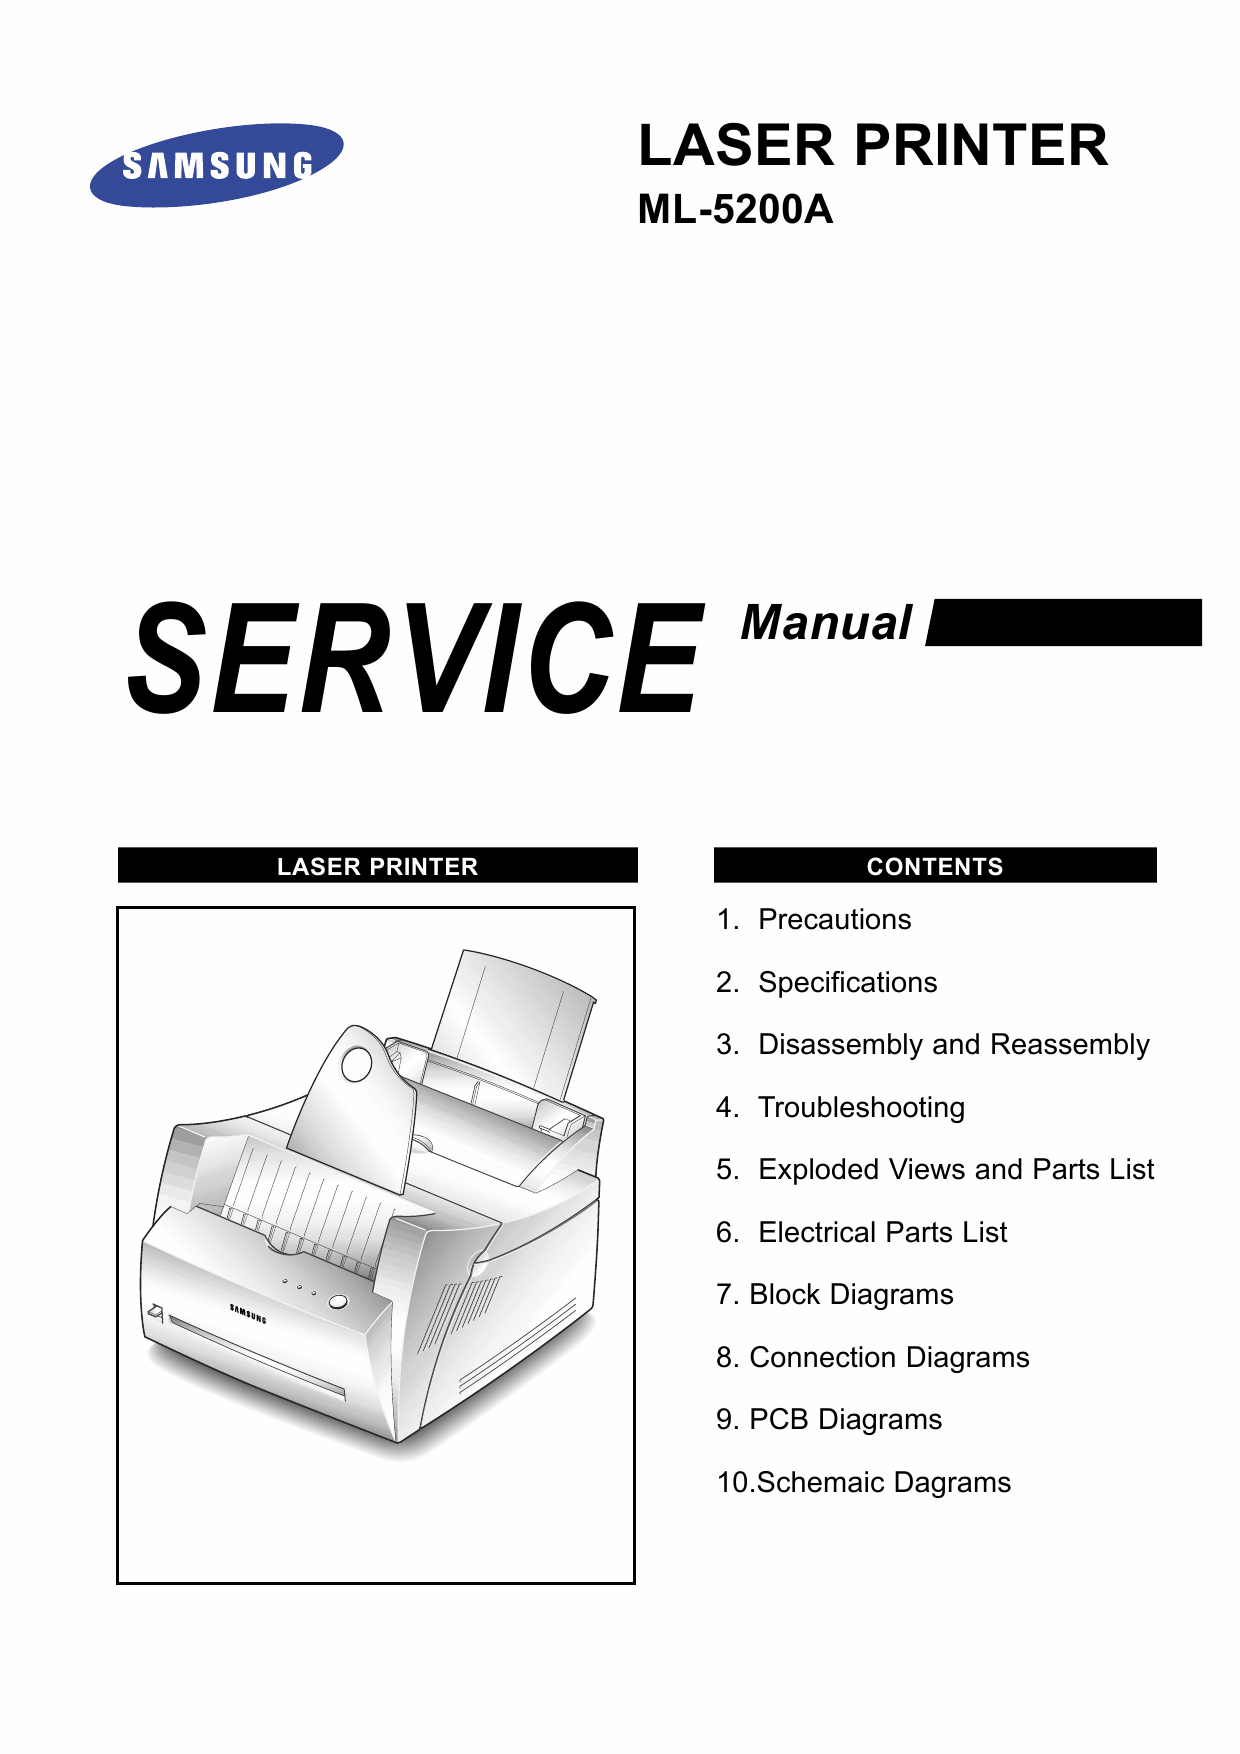 Samsung Laser-Printer ML-5200A Parts and Service Manual-1